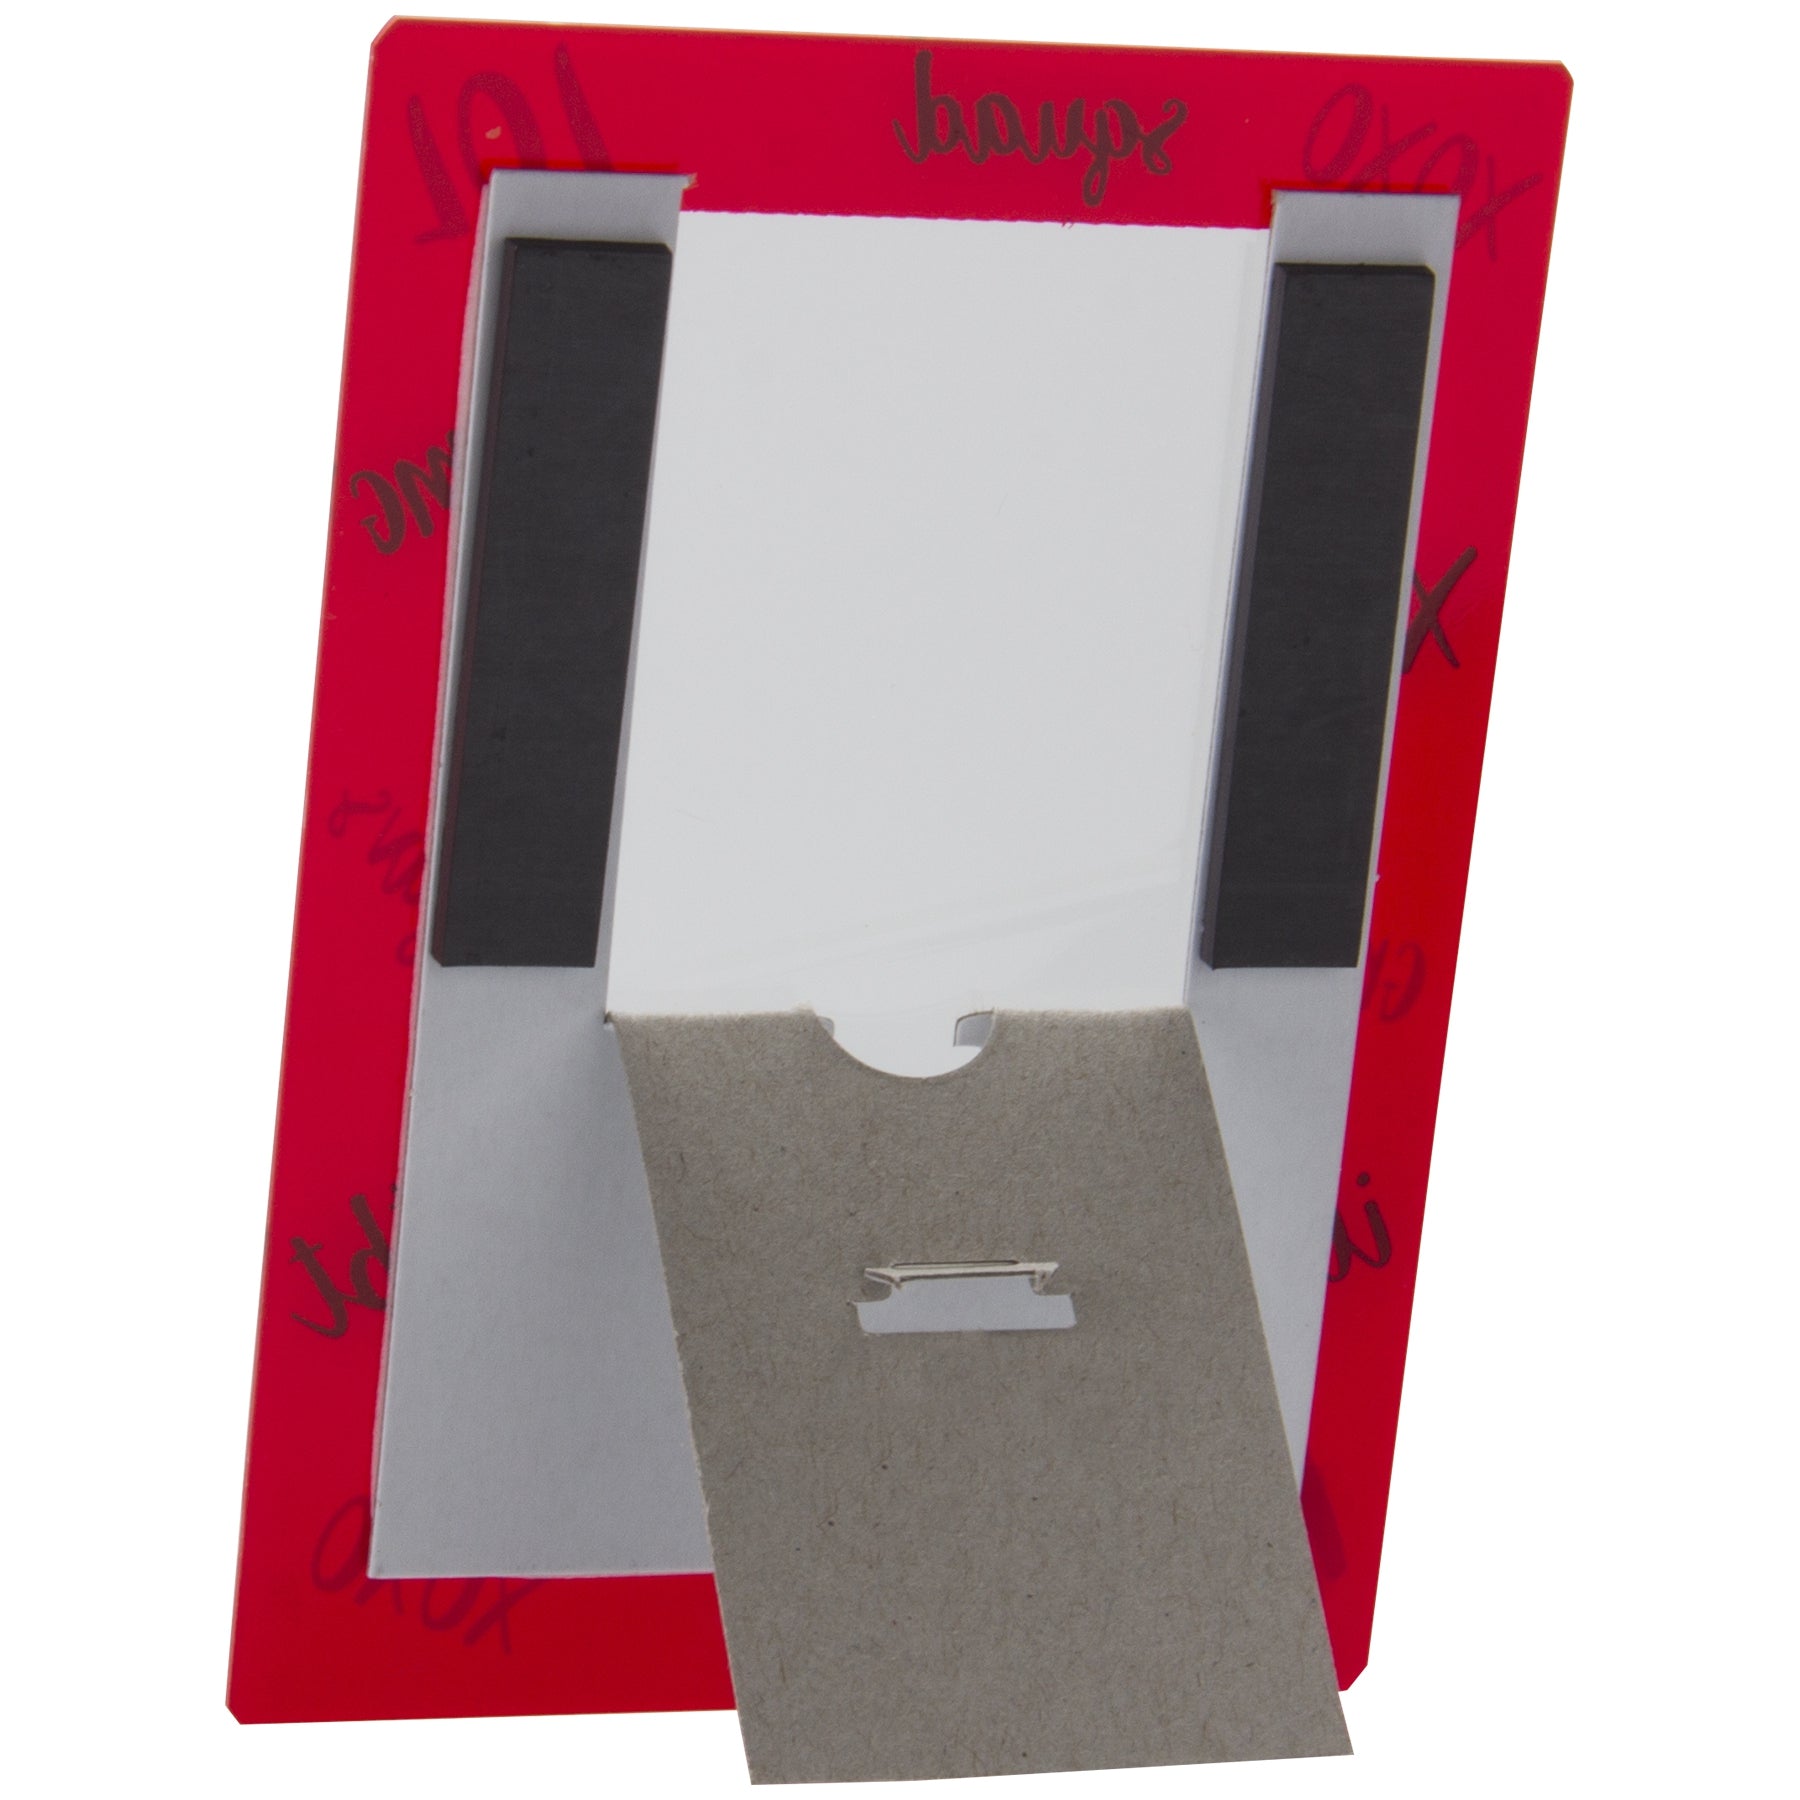 Instax Mini Magnet Photo Frames - 3 Pack